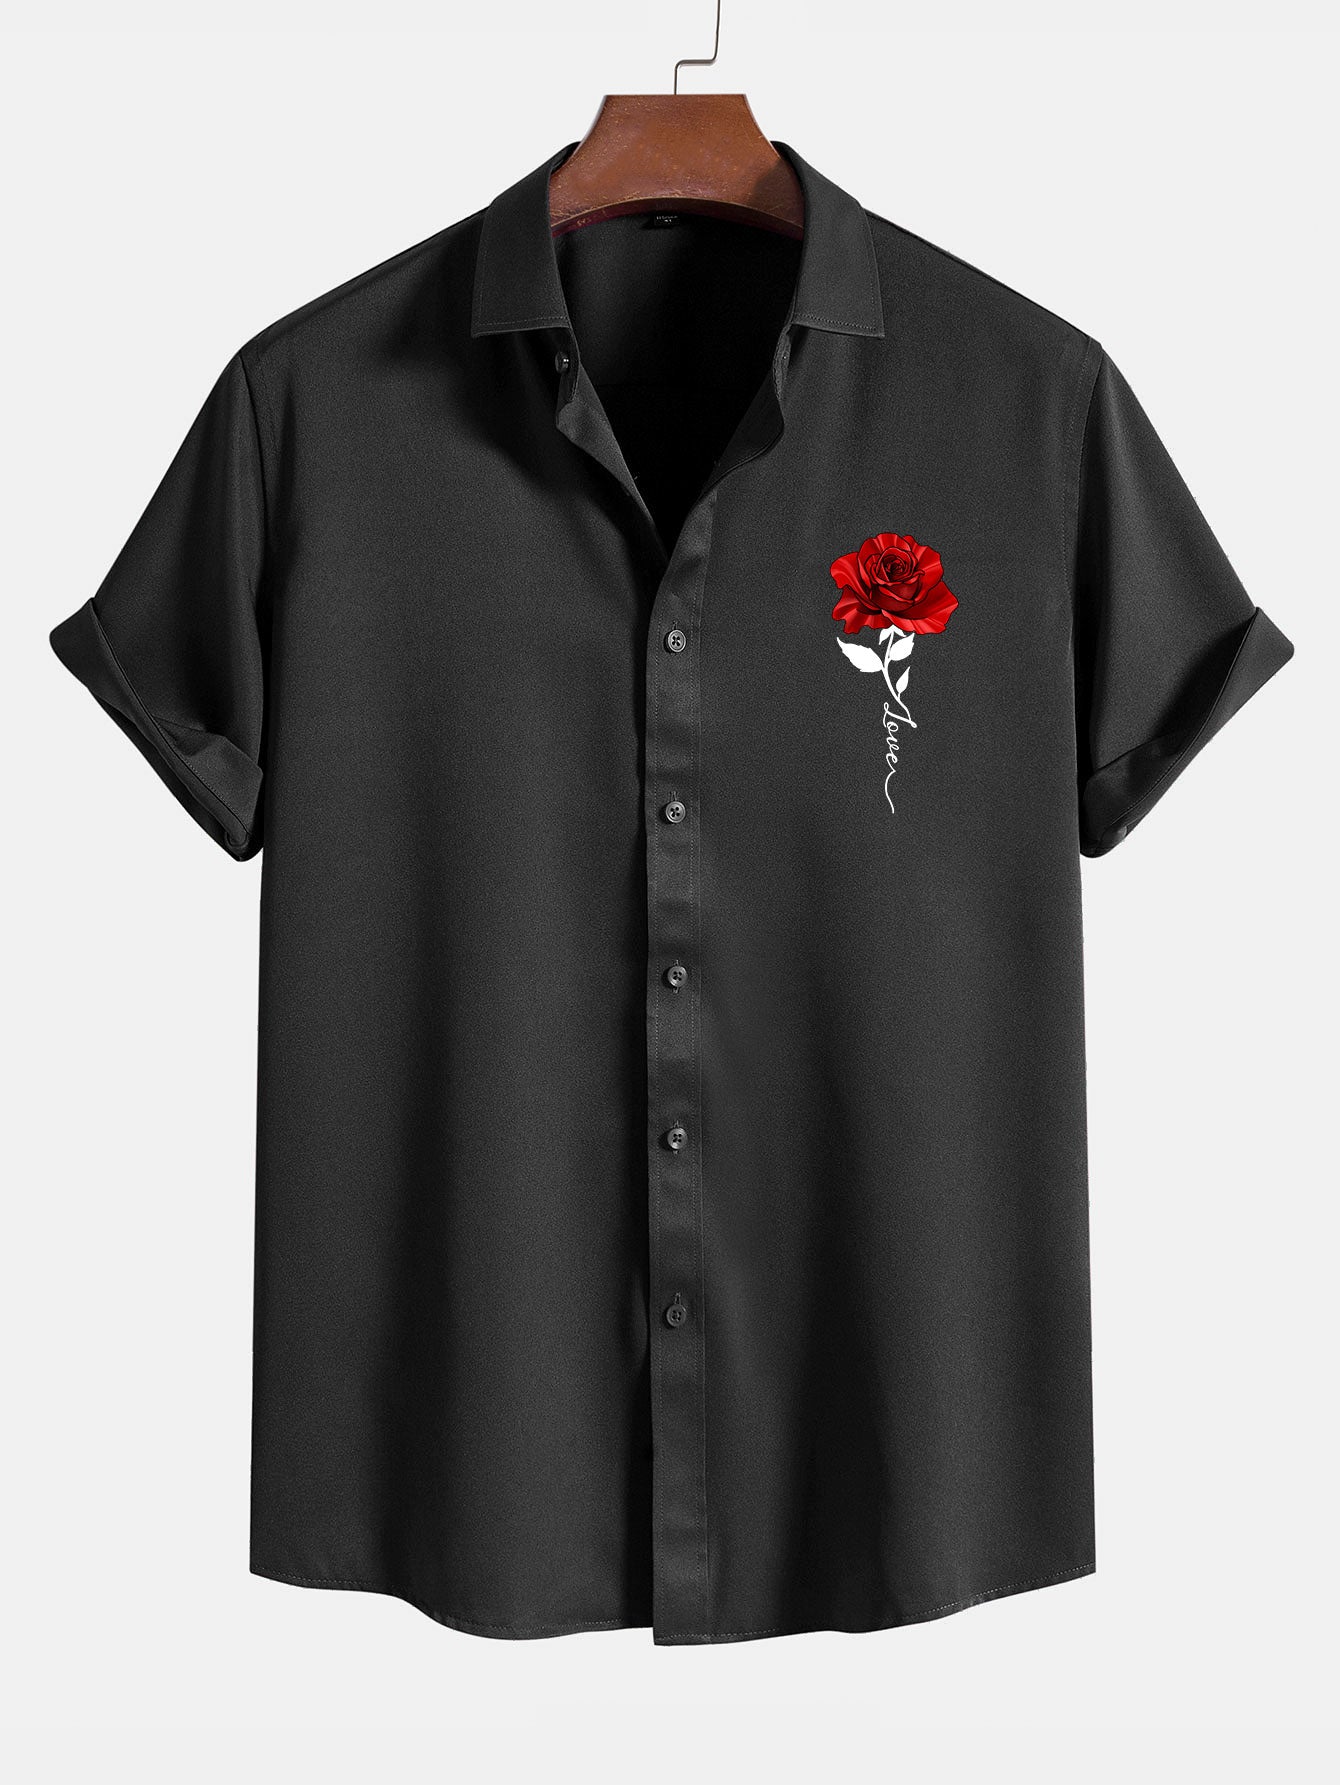 Rose Print Button Up Shirt